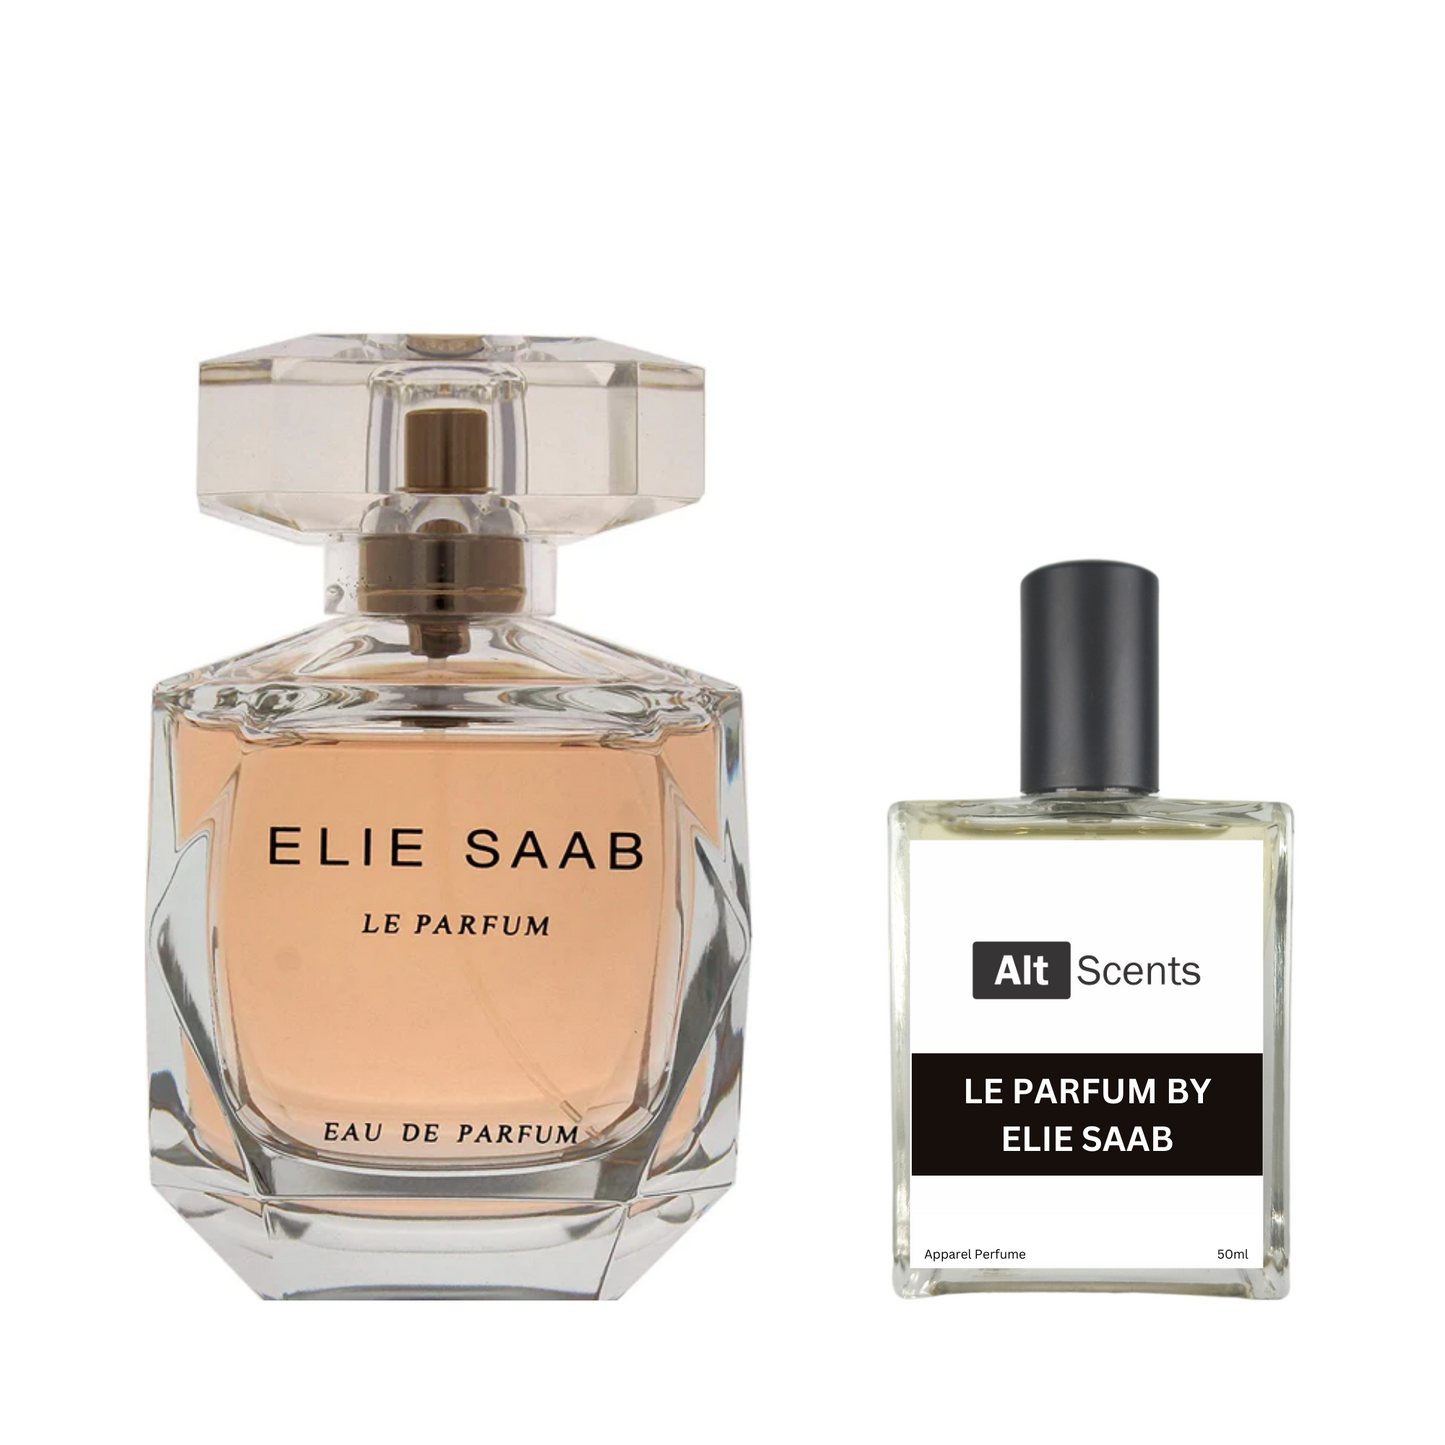 Le Parfum by Elie Saab type Perfume for Women